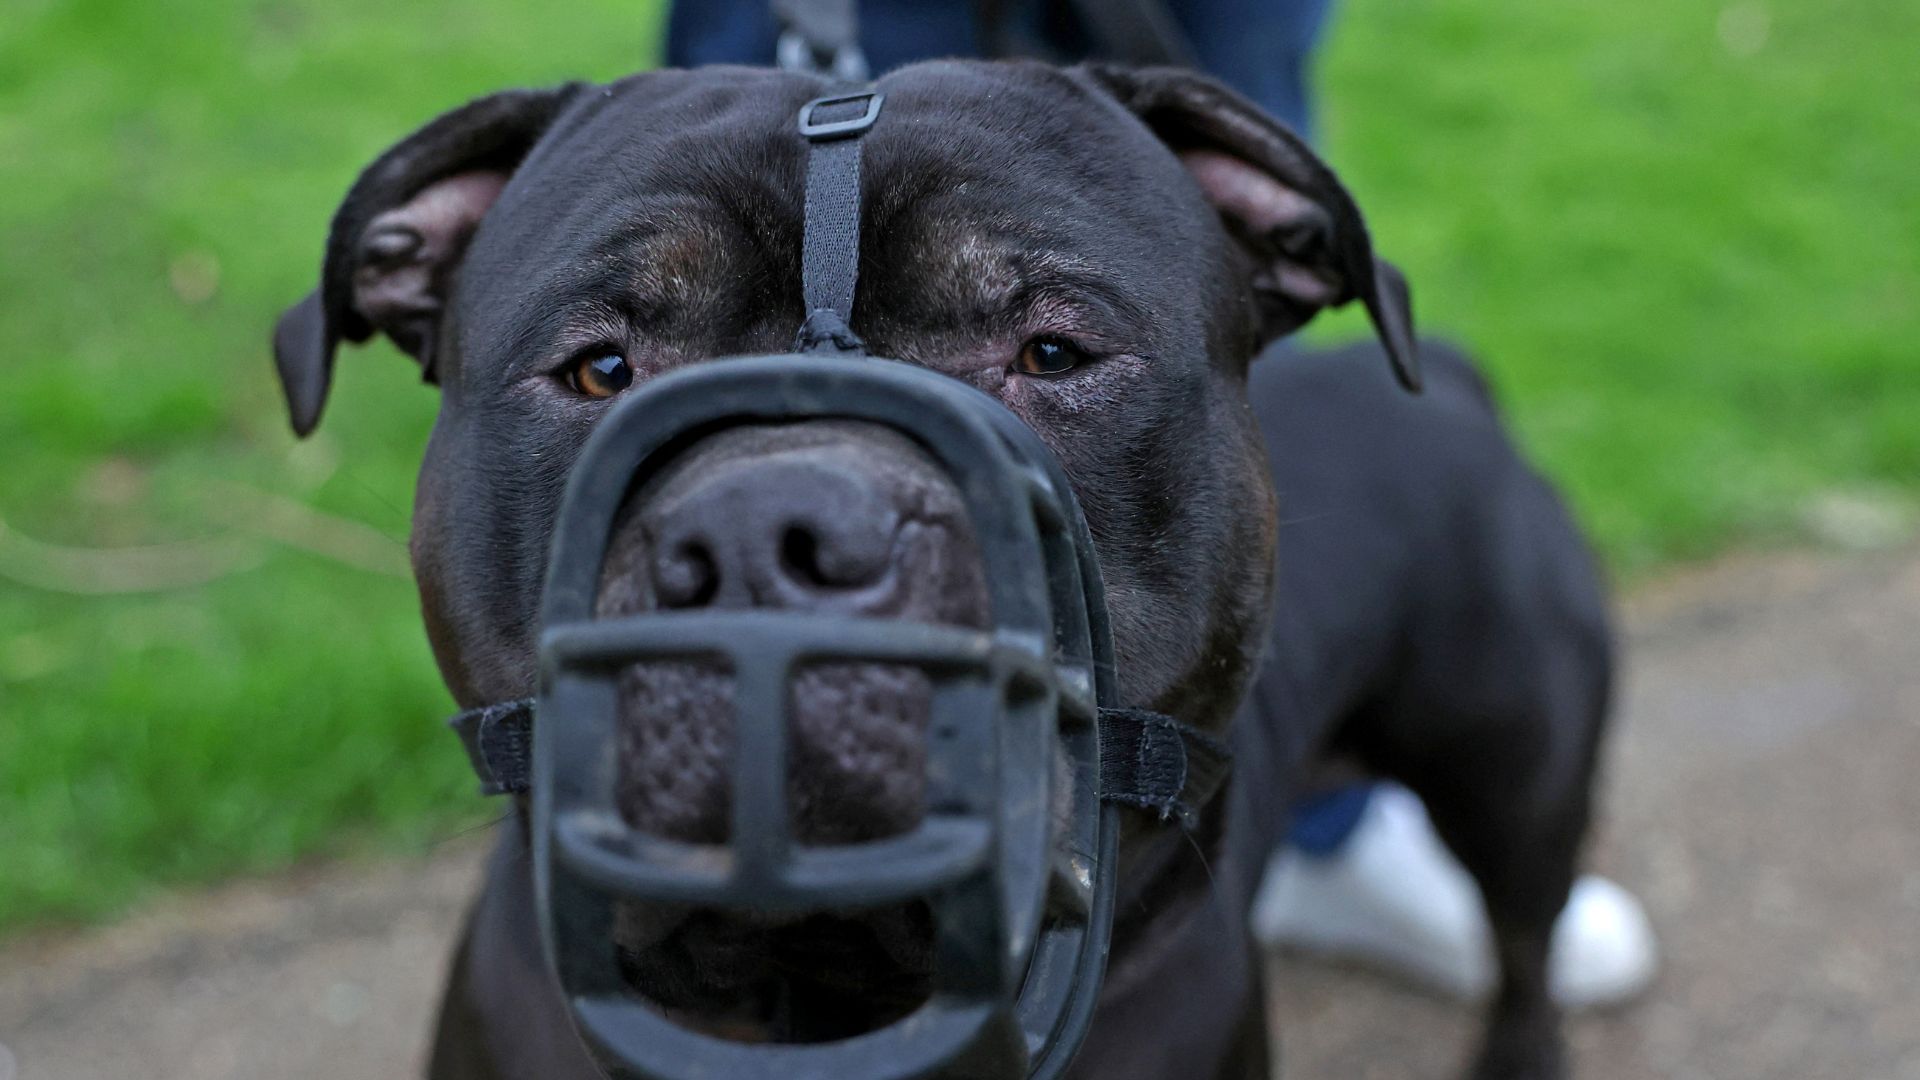 Muzzled XL Bully dog 'Duke'. /Toby Melville/Reuters